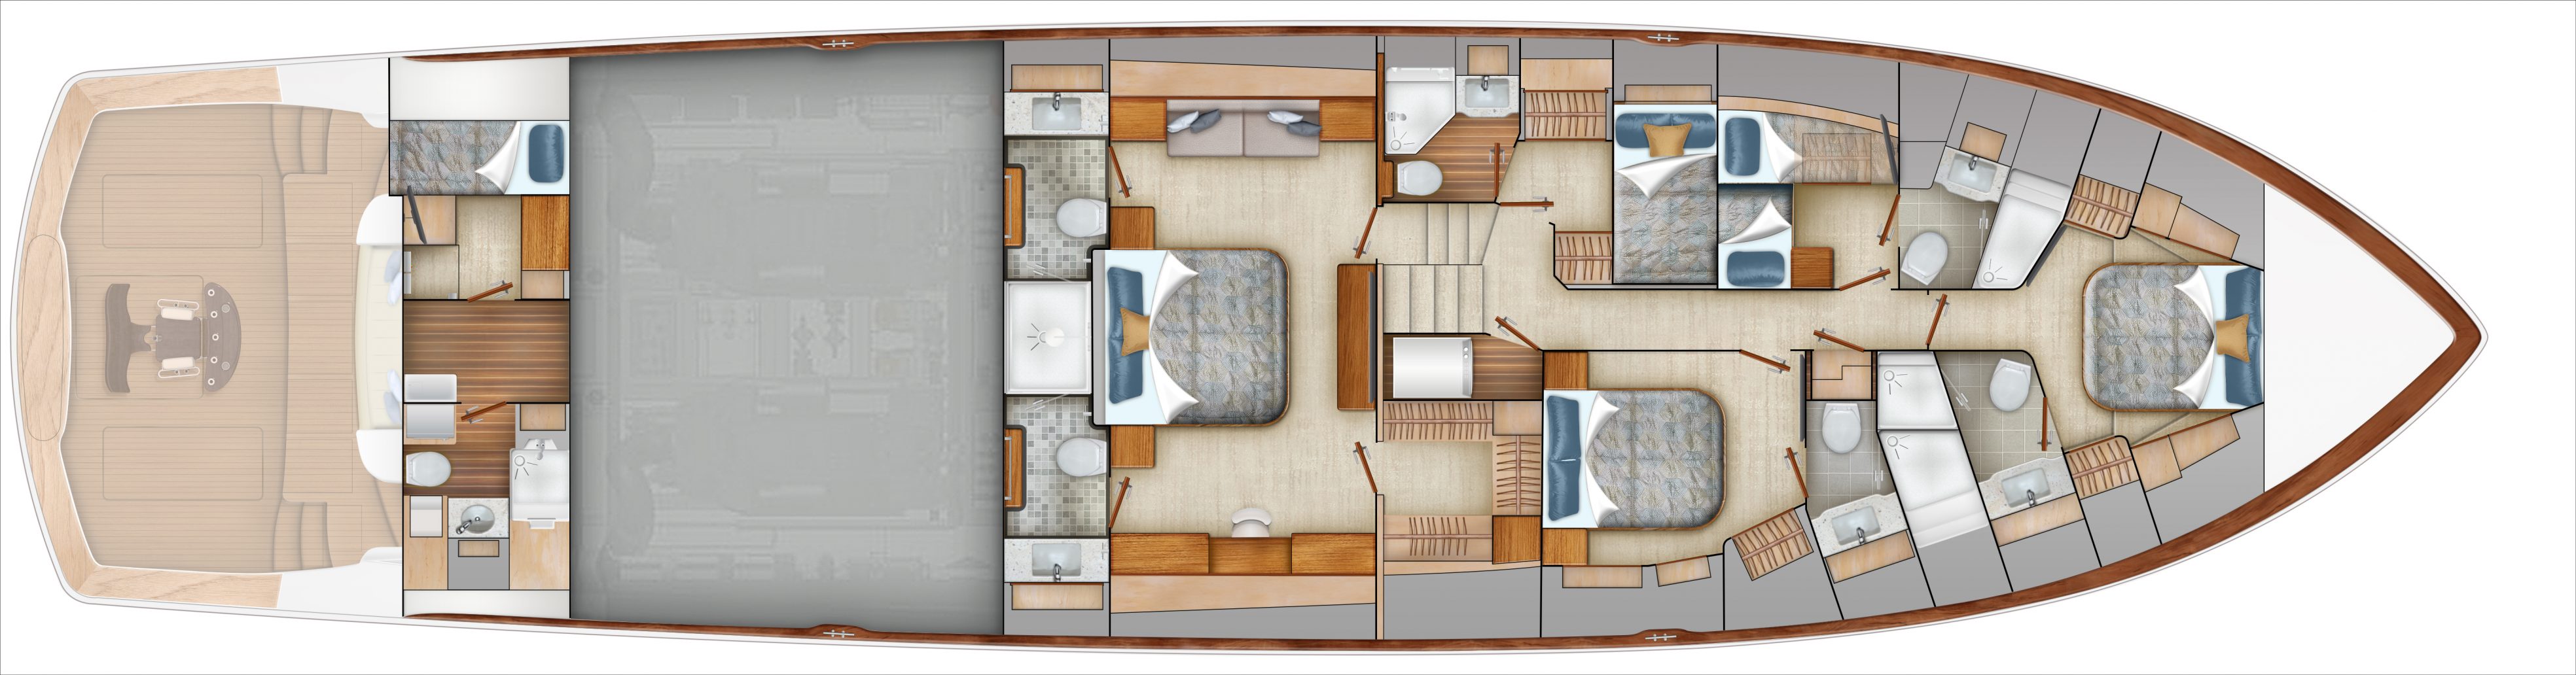 Viking 90 Lower Accommodations Floor plan